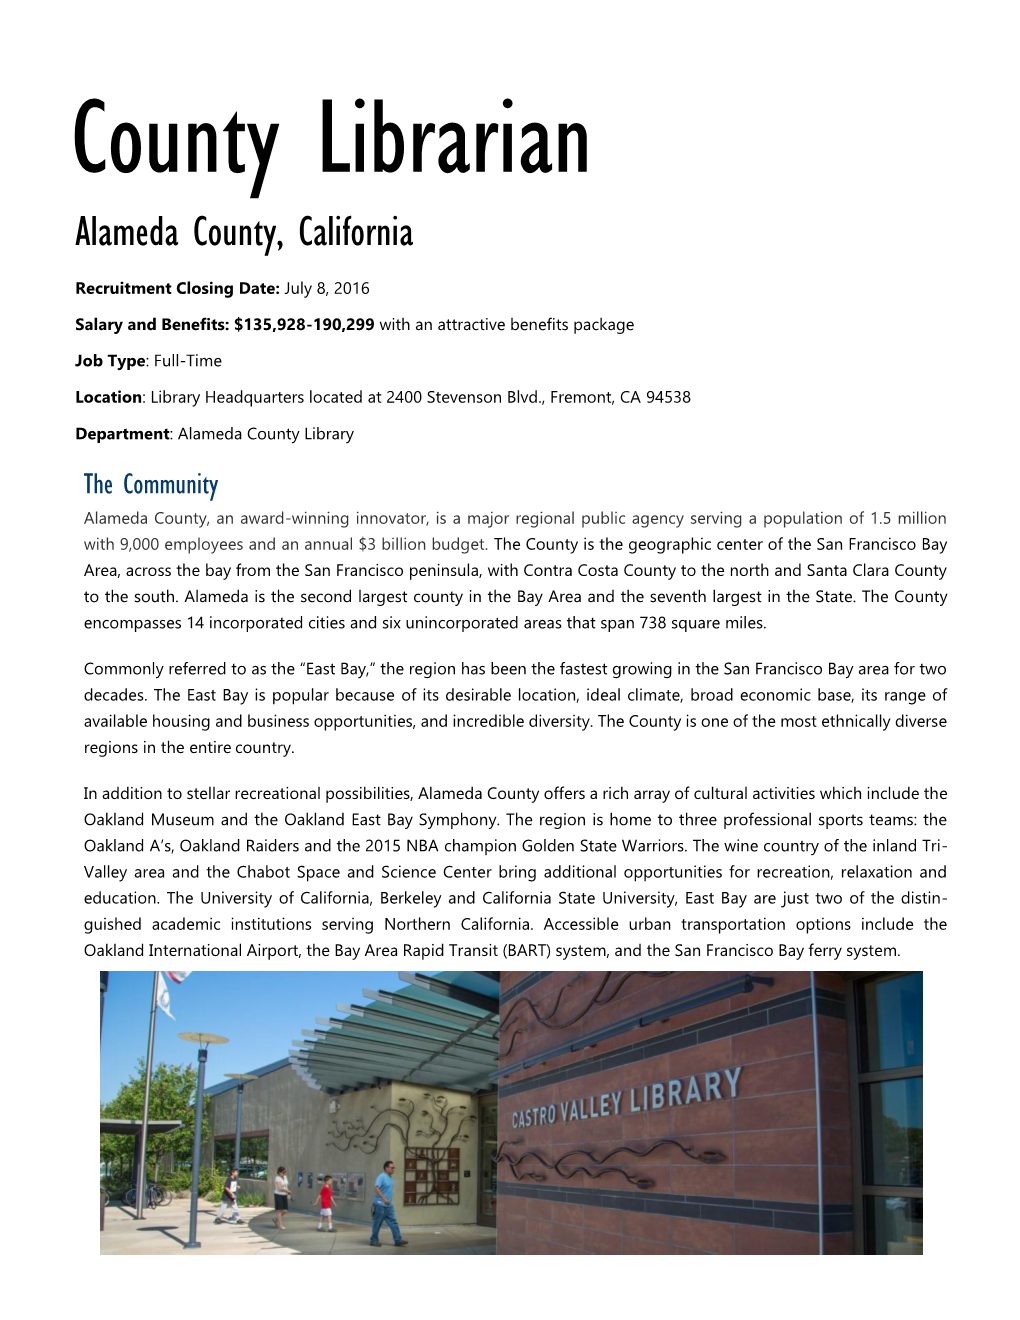 County Librarian Alameda County, California